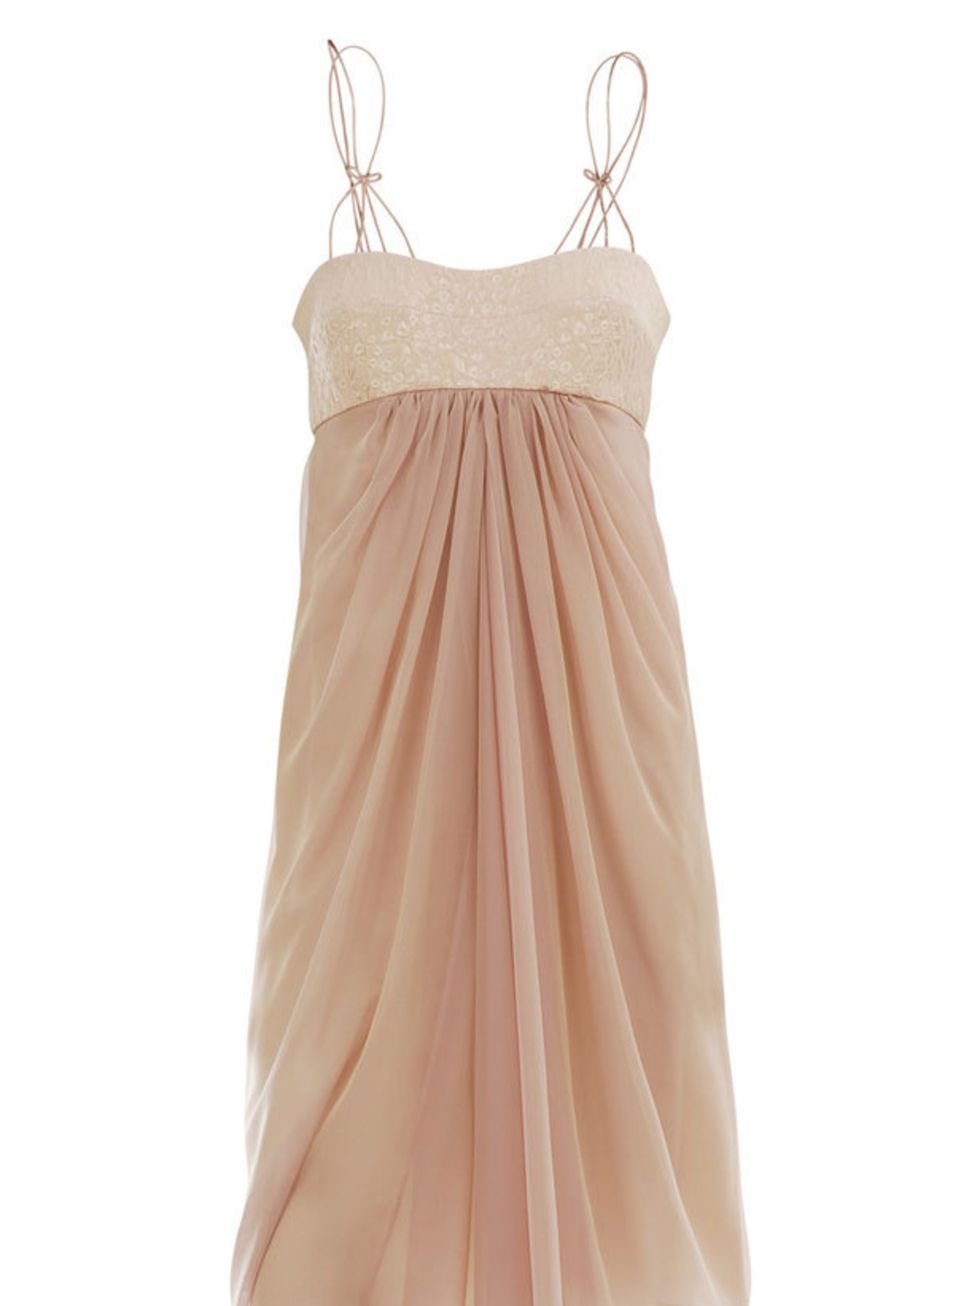 <p>Nude silk dress, £498, by Max Mara at <a href="http://www.matchesfashion.com/fcp/product/Matches-Fashion//maxmara-PF-X-AVON-dresses-NUDE/38087">Matches</a></p>